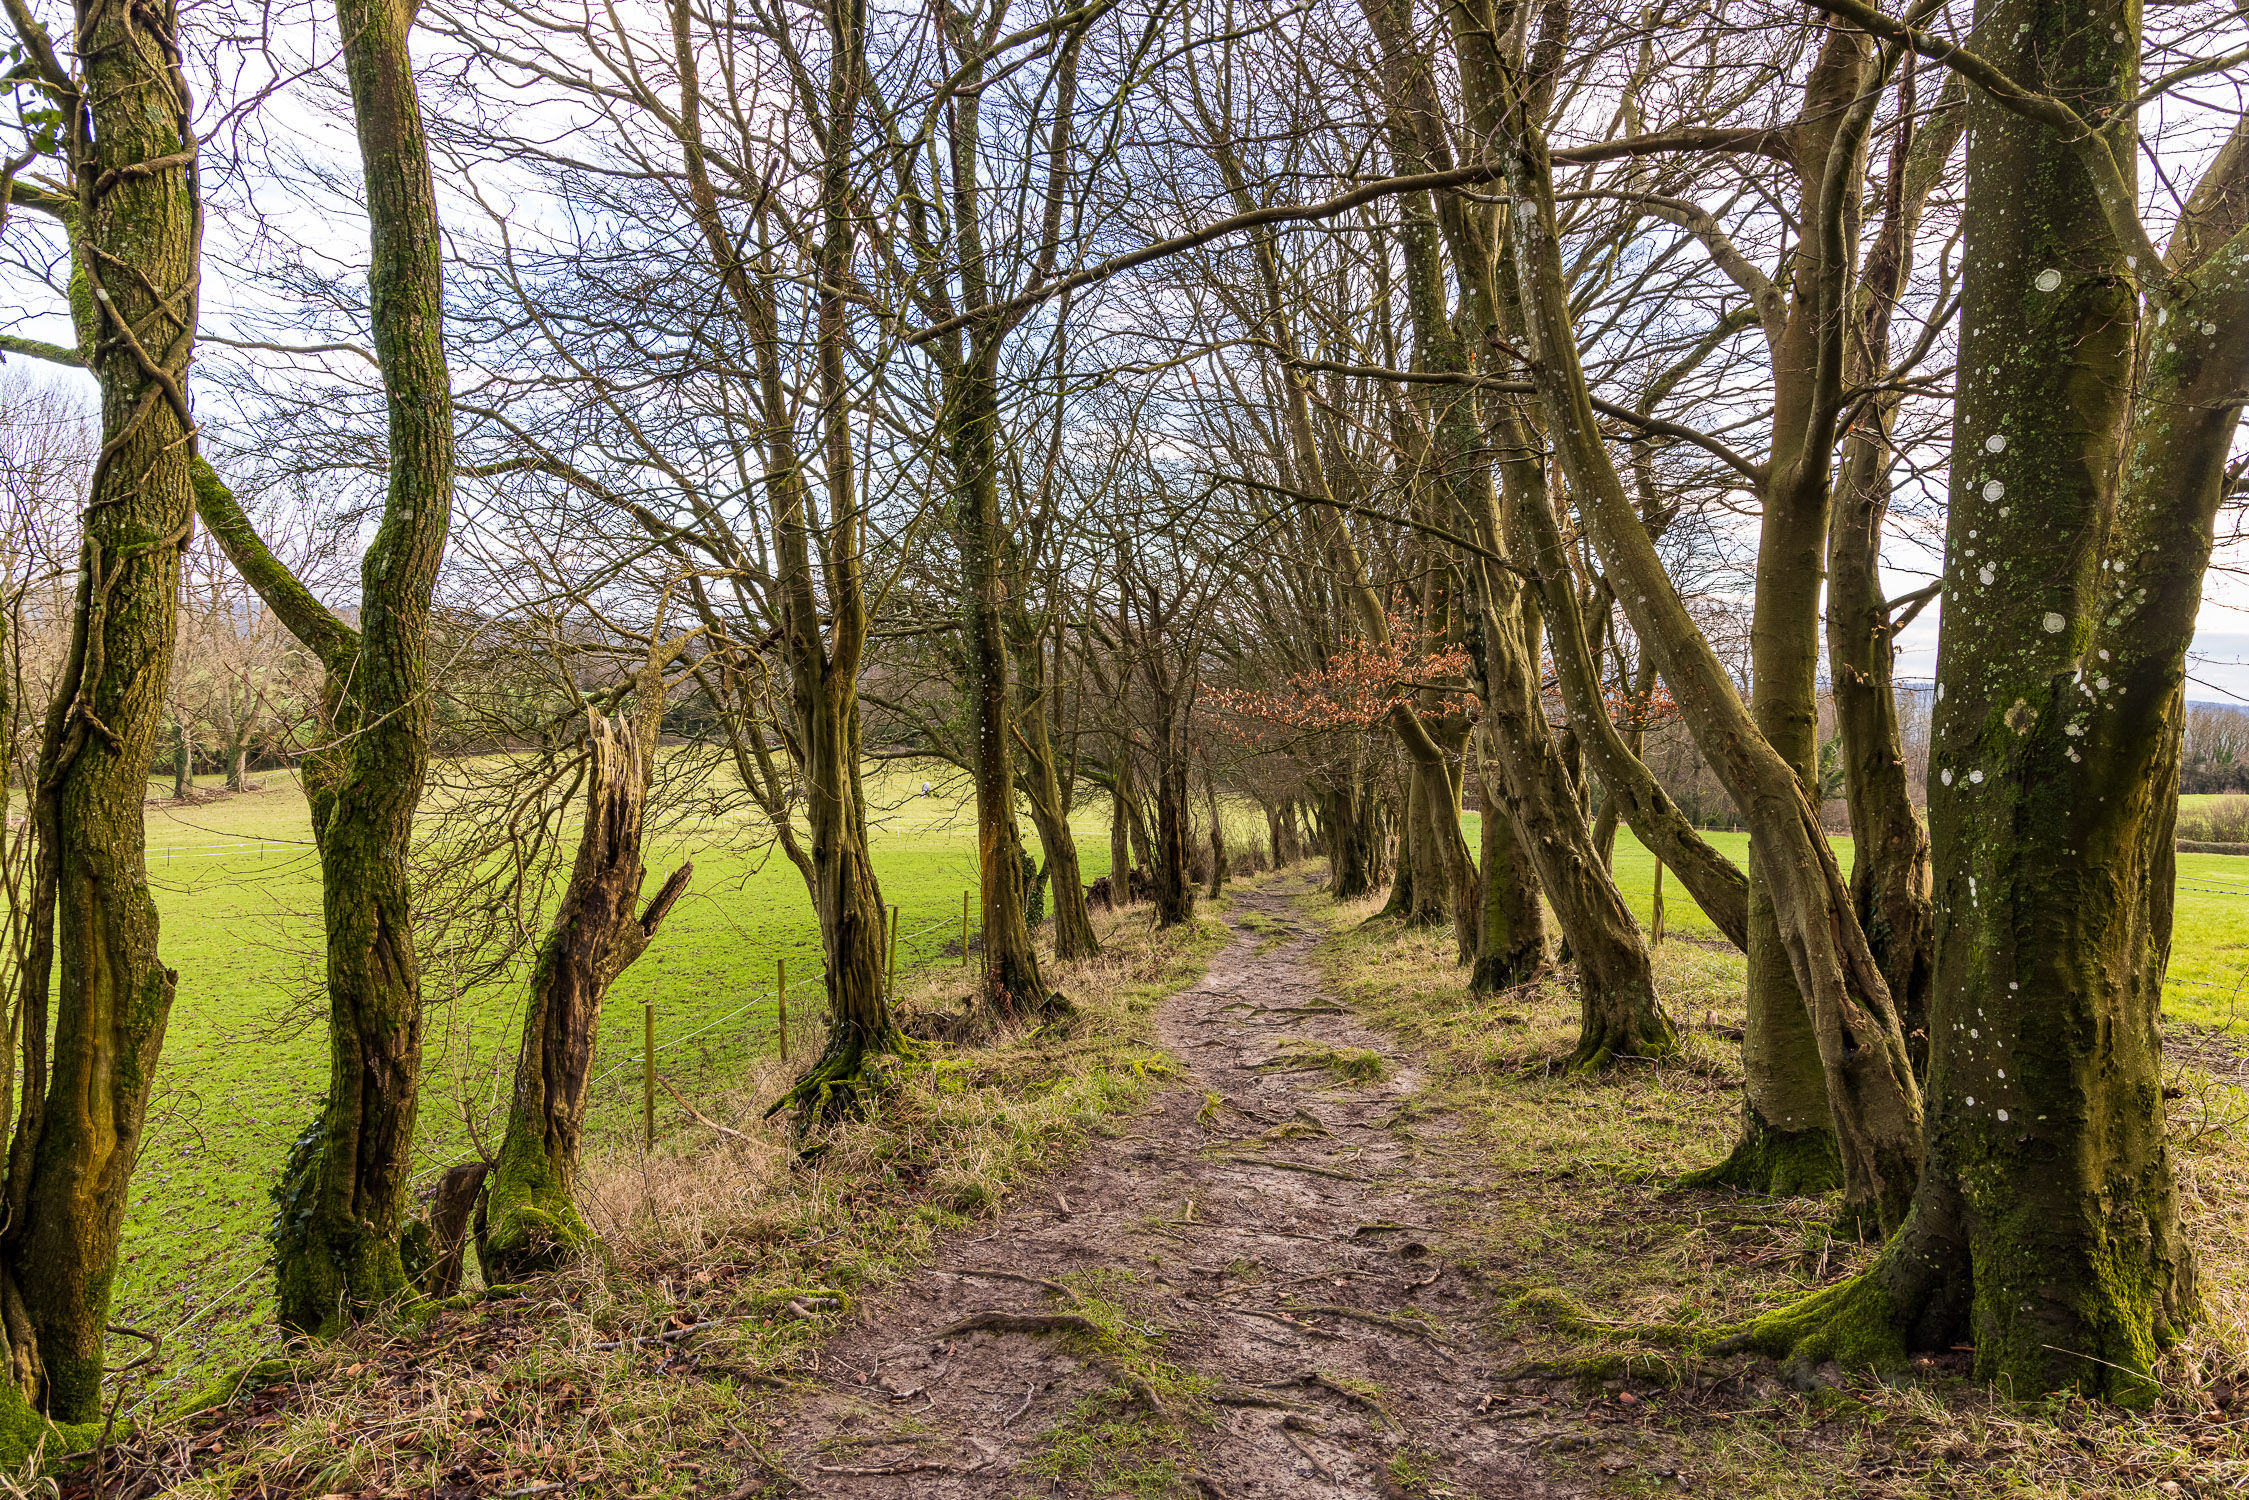 Footpath through the trees, Steep Marsh